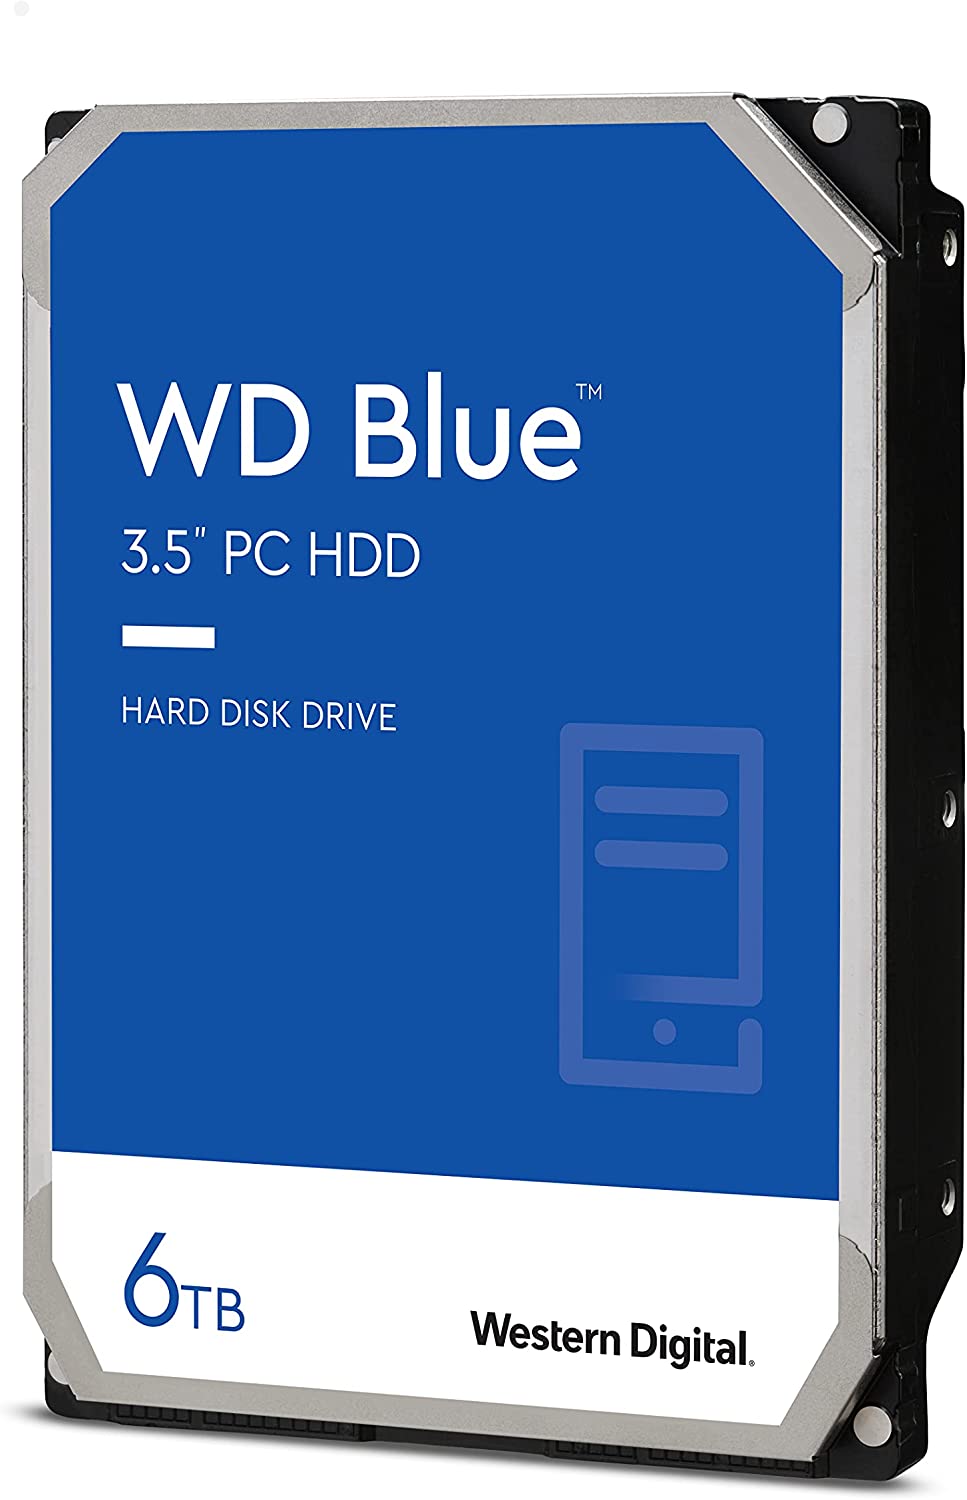 6TB WD Blue 5400 RPM 3.5" SATA 6 Gb/s, 256MB Cache Hard Drive $80 + Free Shipping